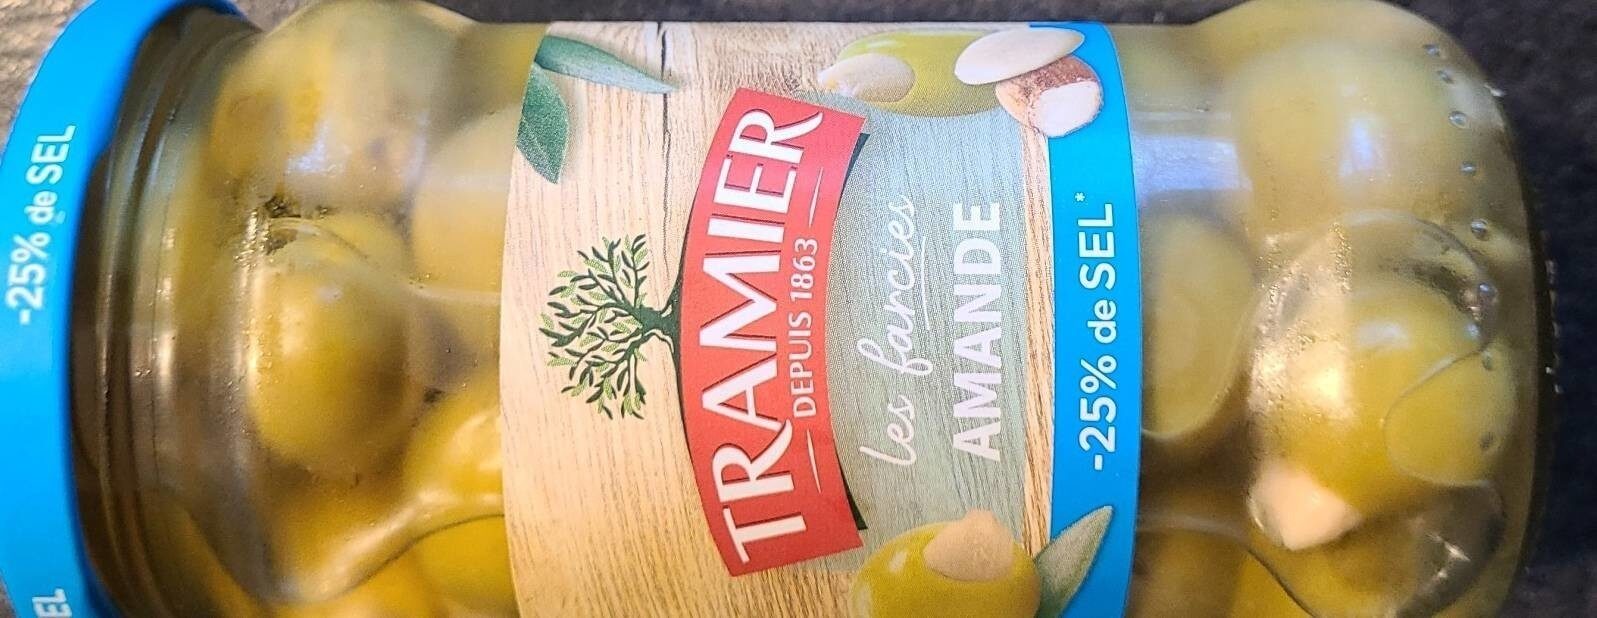 Olives les farcies amande - Product - fr